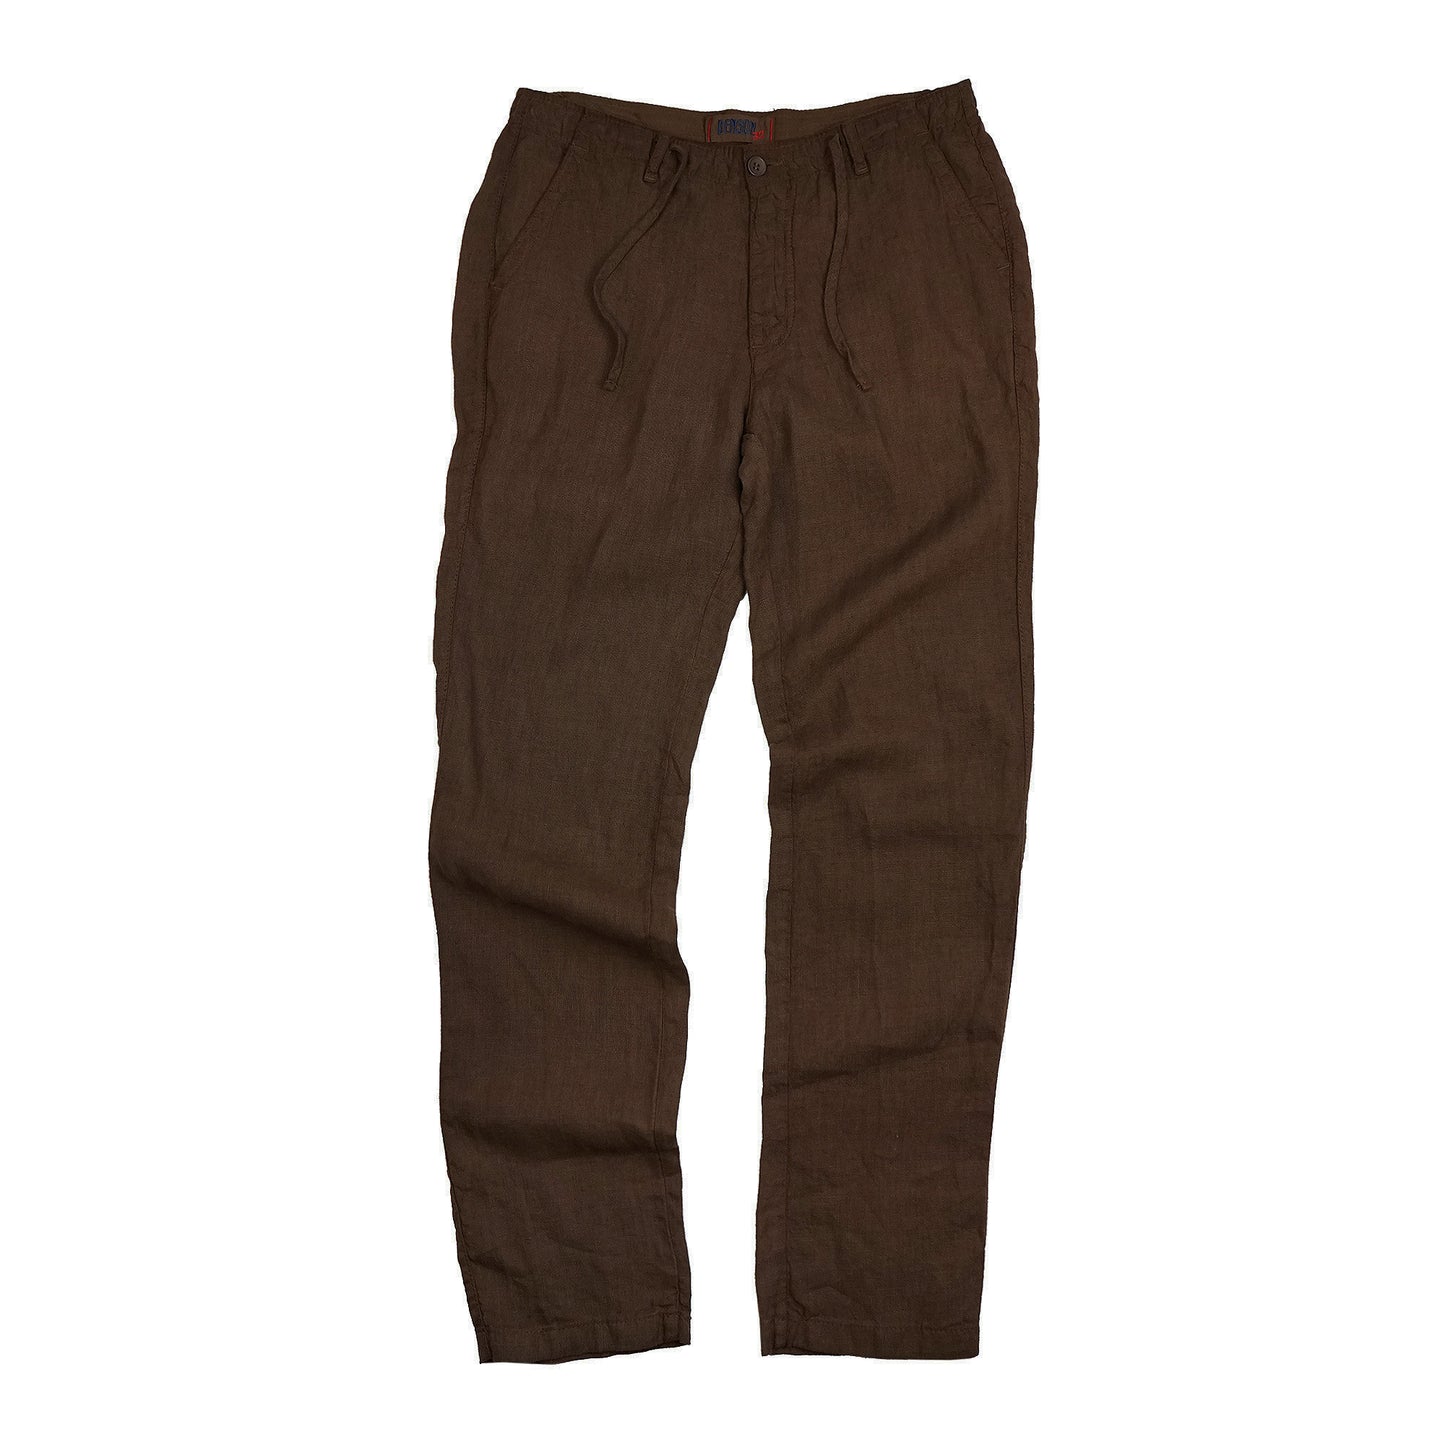 Key West Chocolate Linen Pants